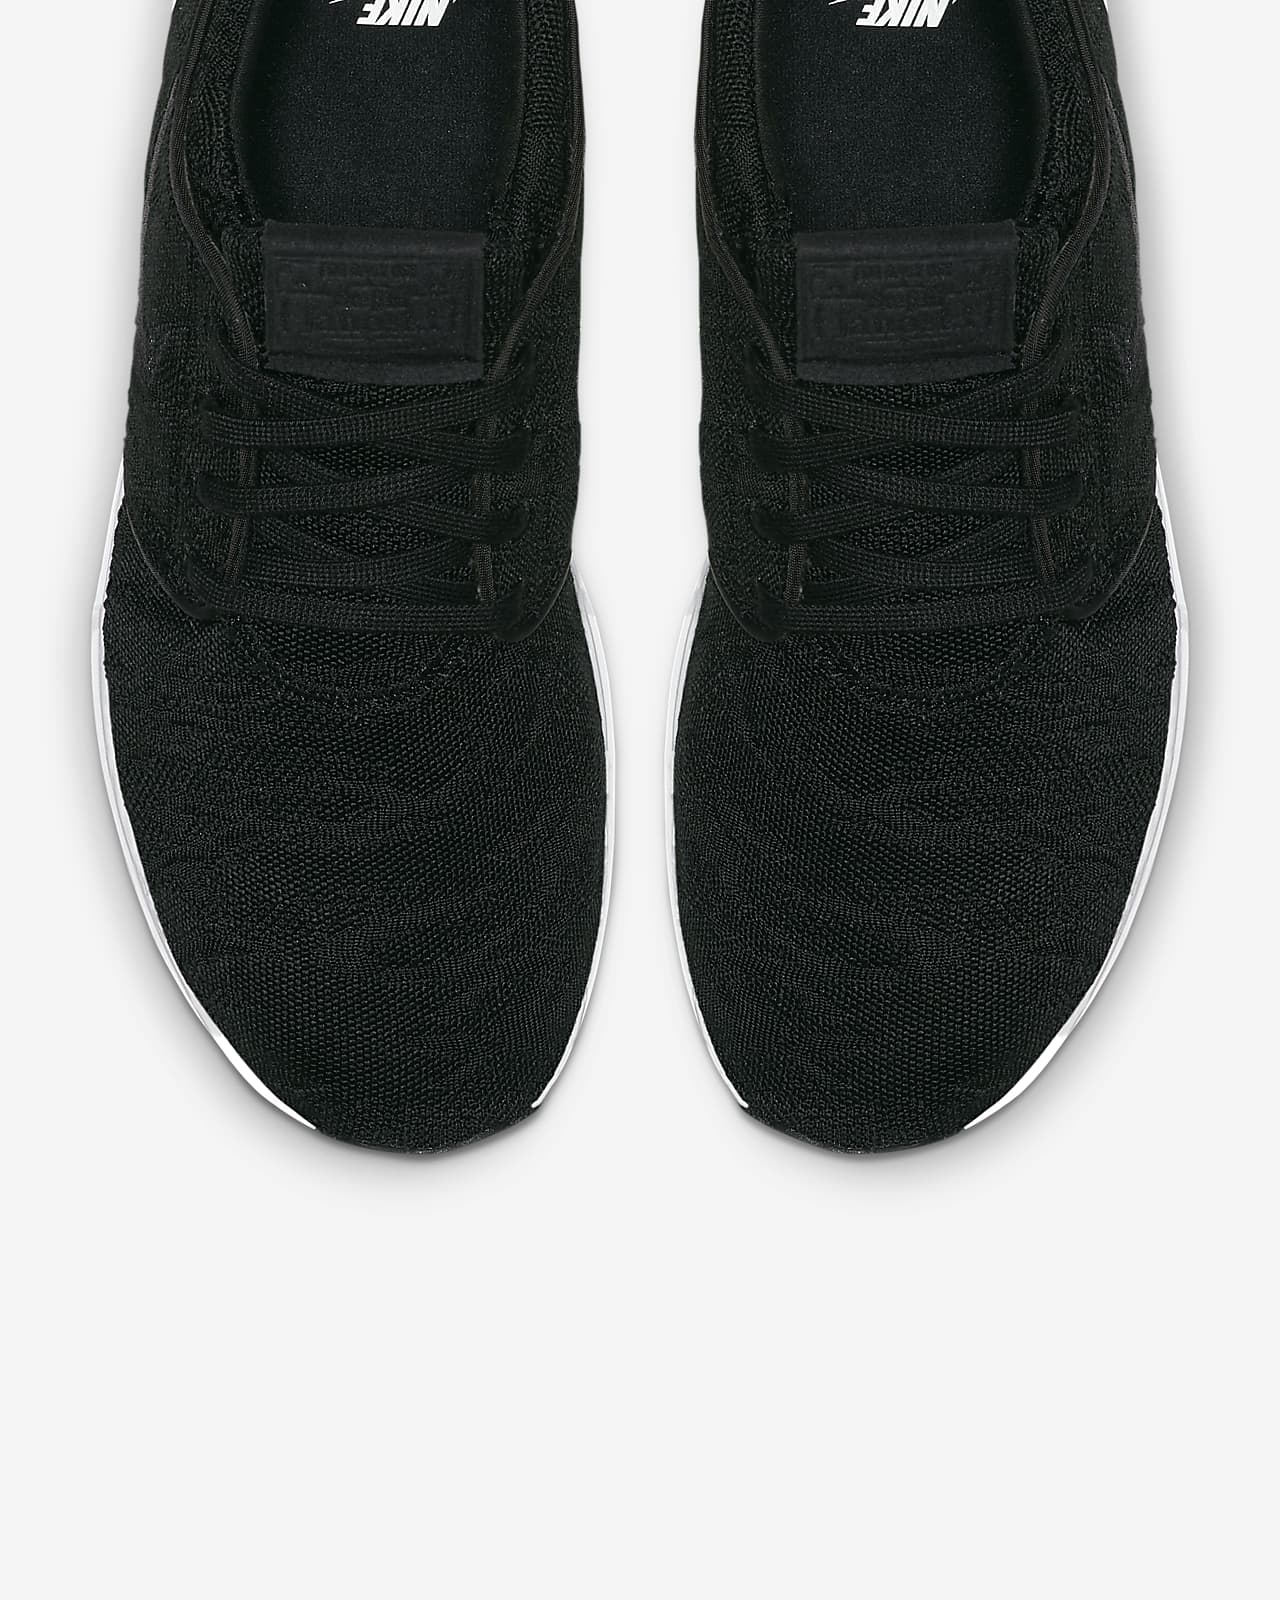 nike sb janoski air max black & camo mesh skate shoes